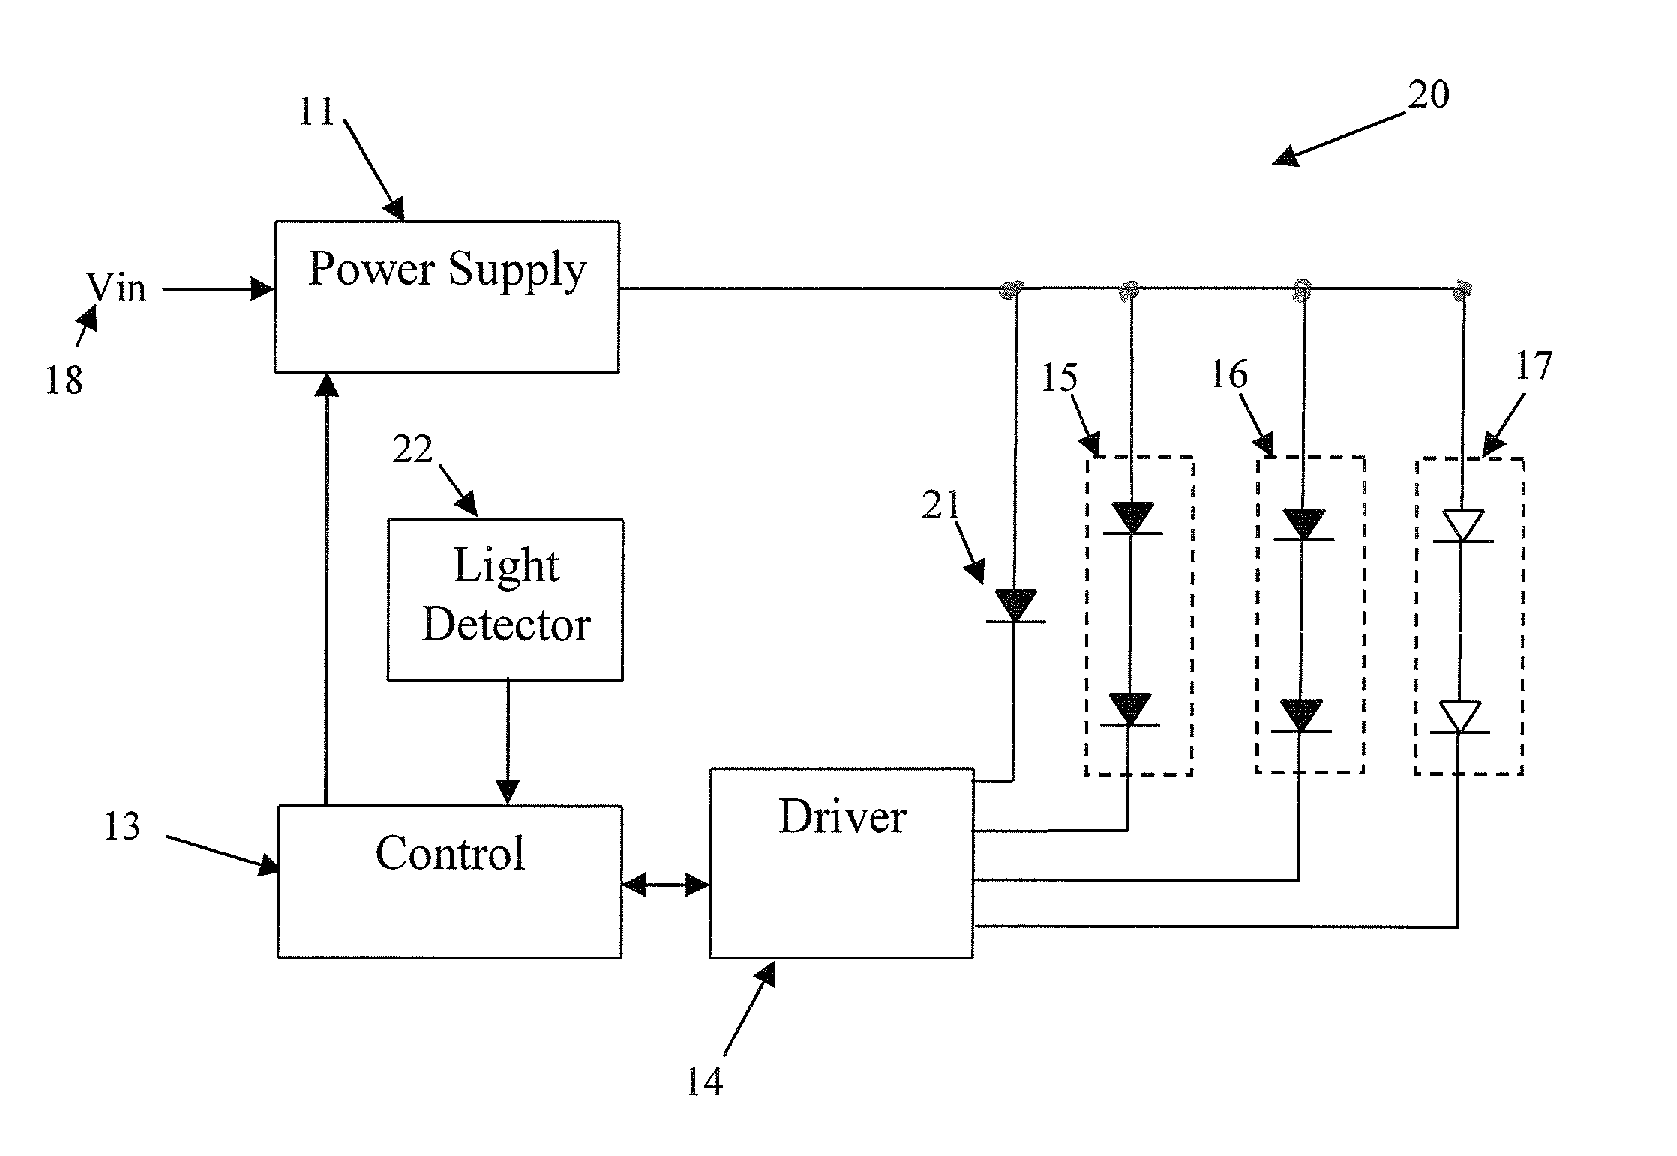 Luminance control for illumination devices